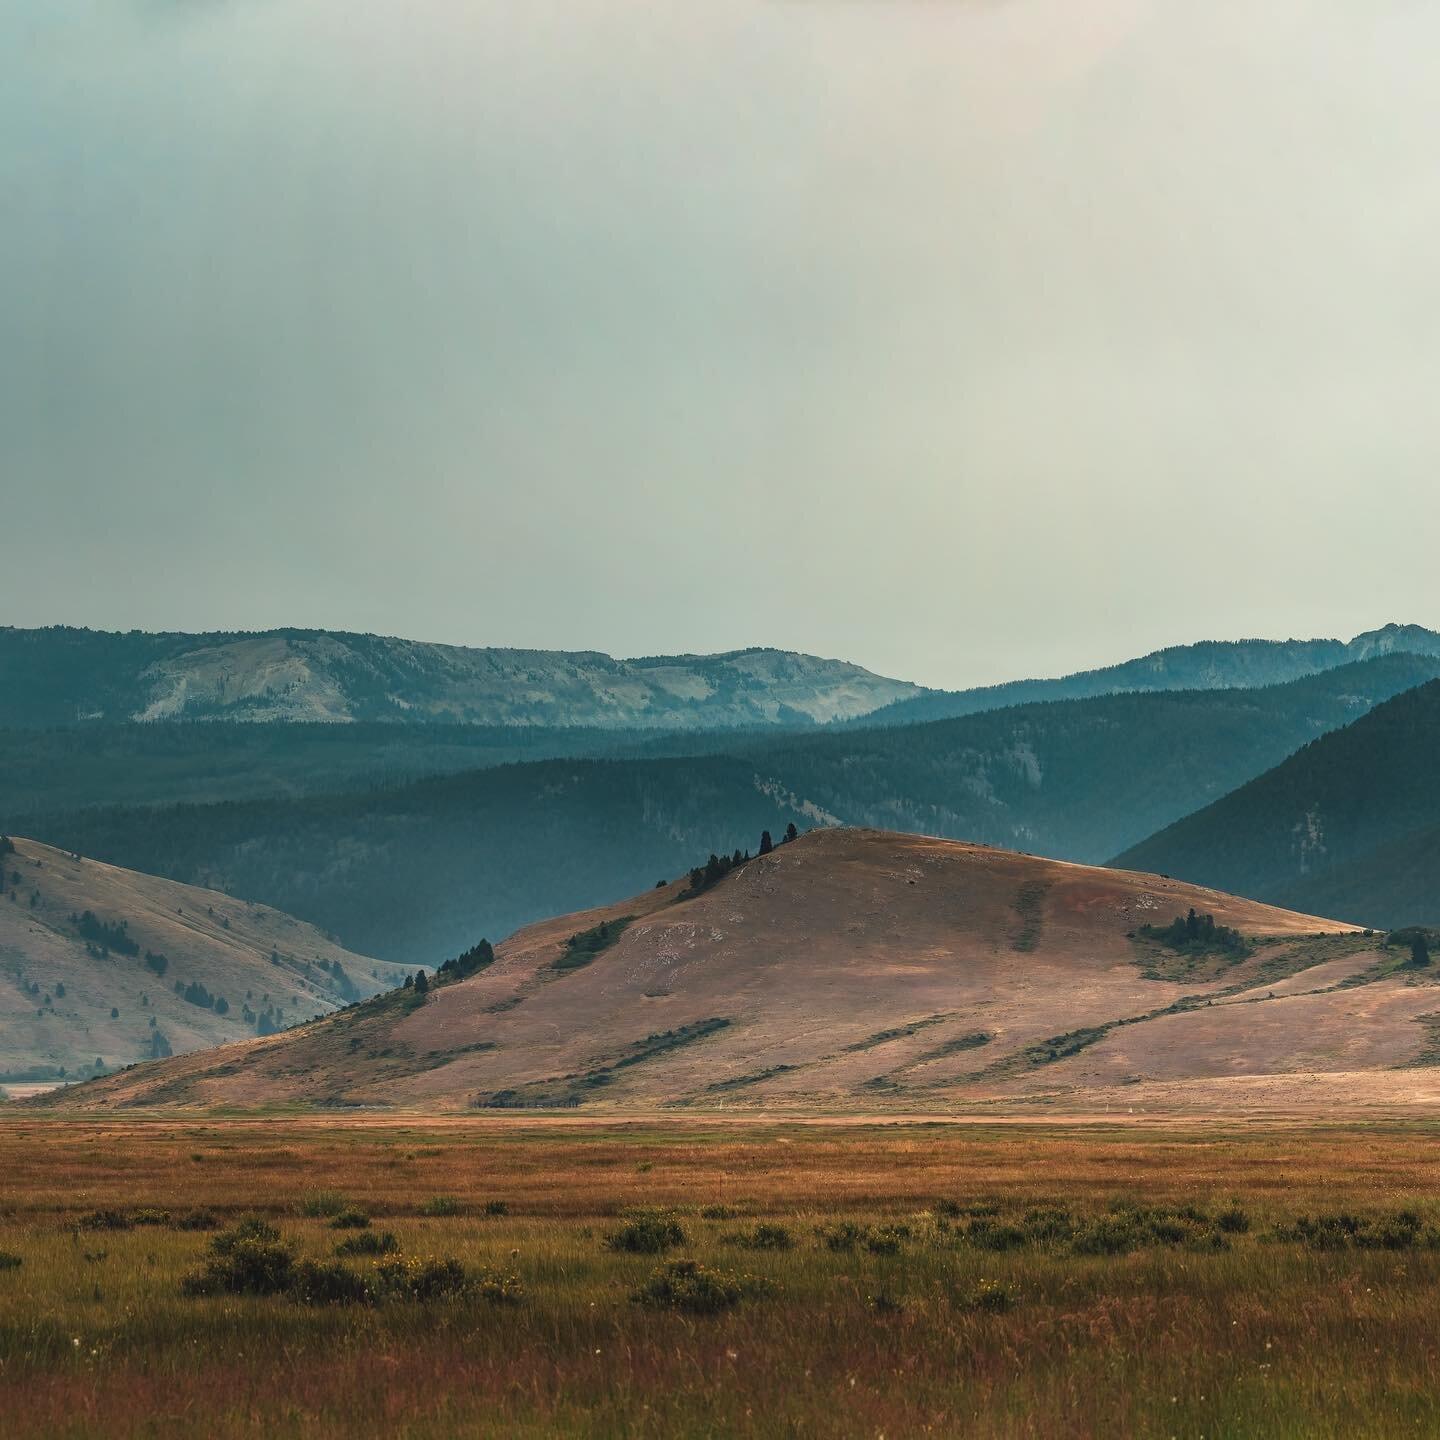 The Jackson Hole Wyoming countryside in it&rsquo;s serene glory&hellip; #wyoming #jacksonhole #landscapephotograpy #photography #landscapes #travel #beautiful #mylens